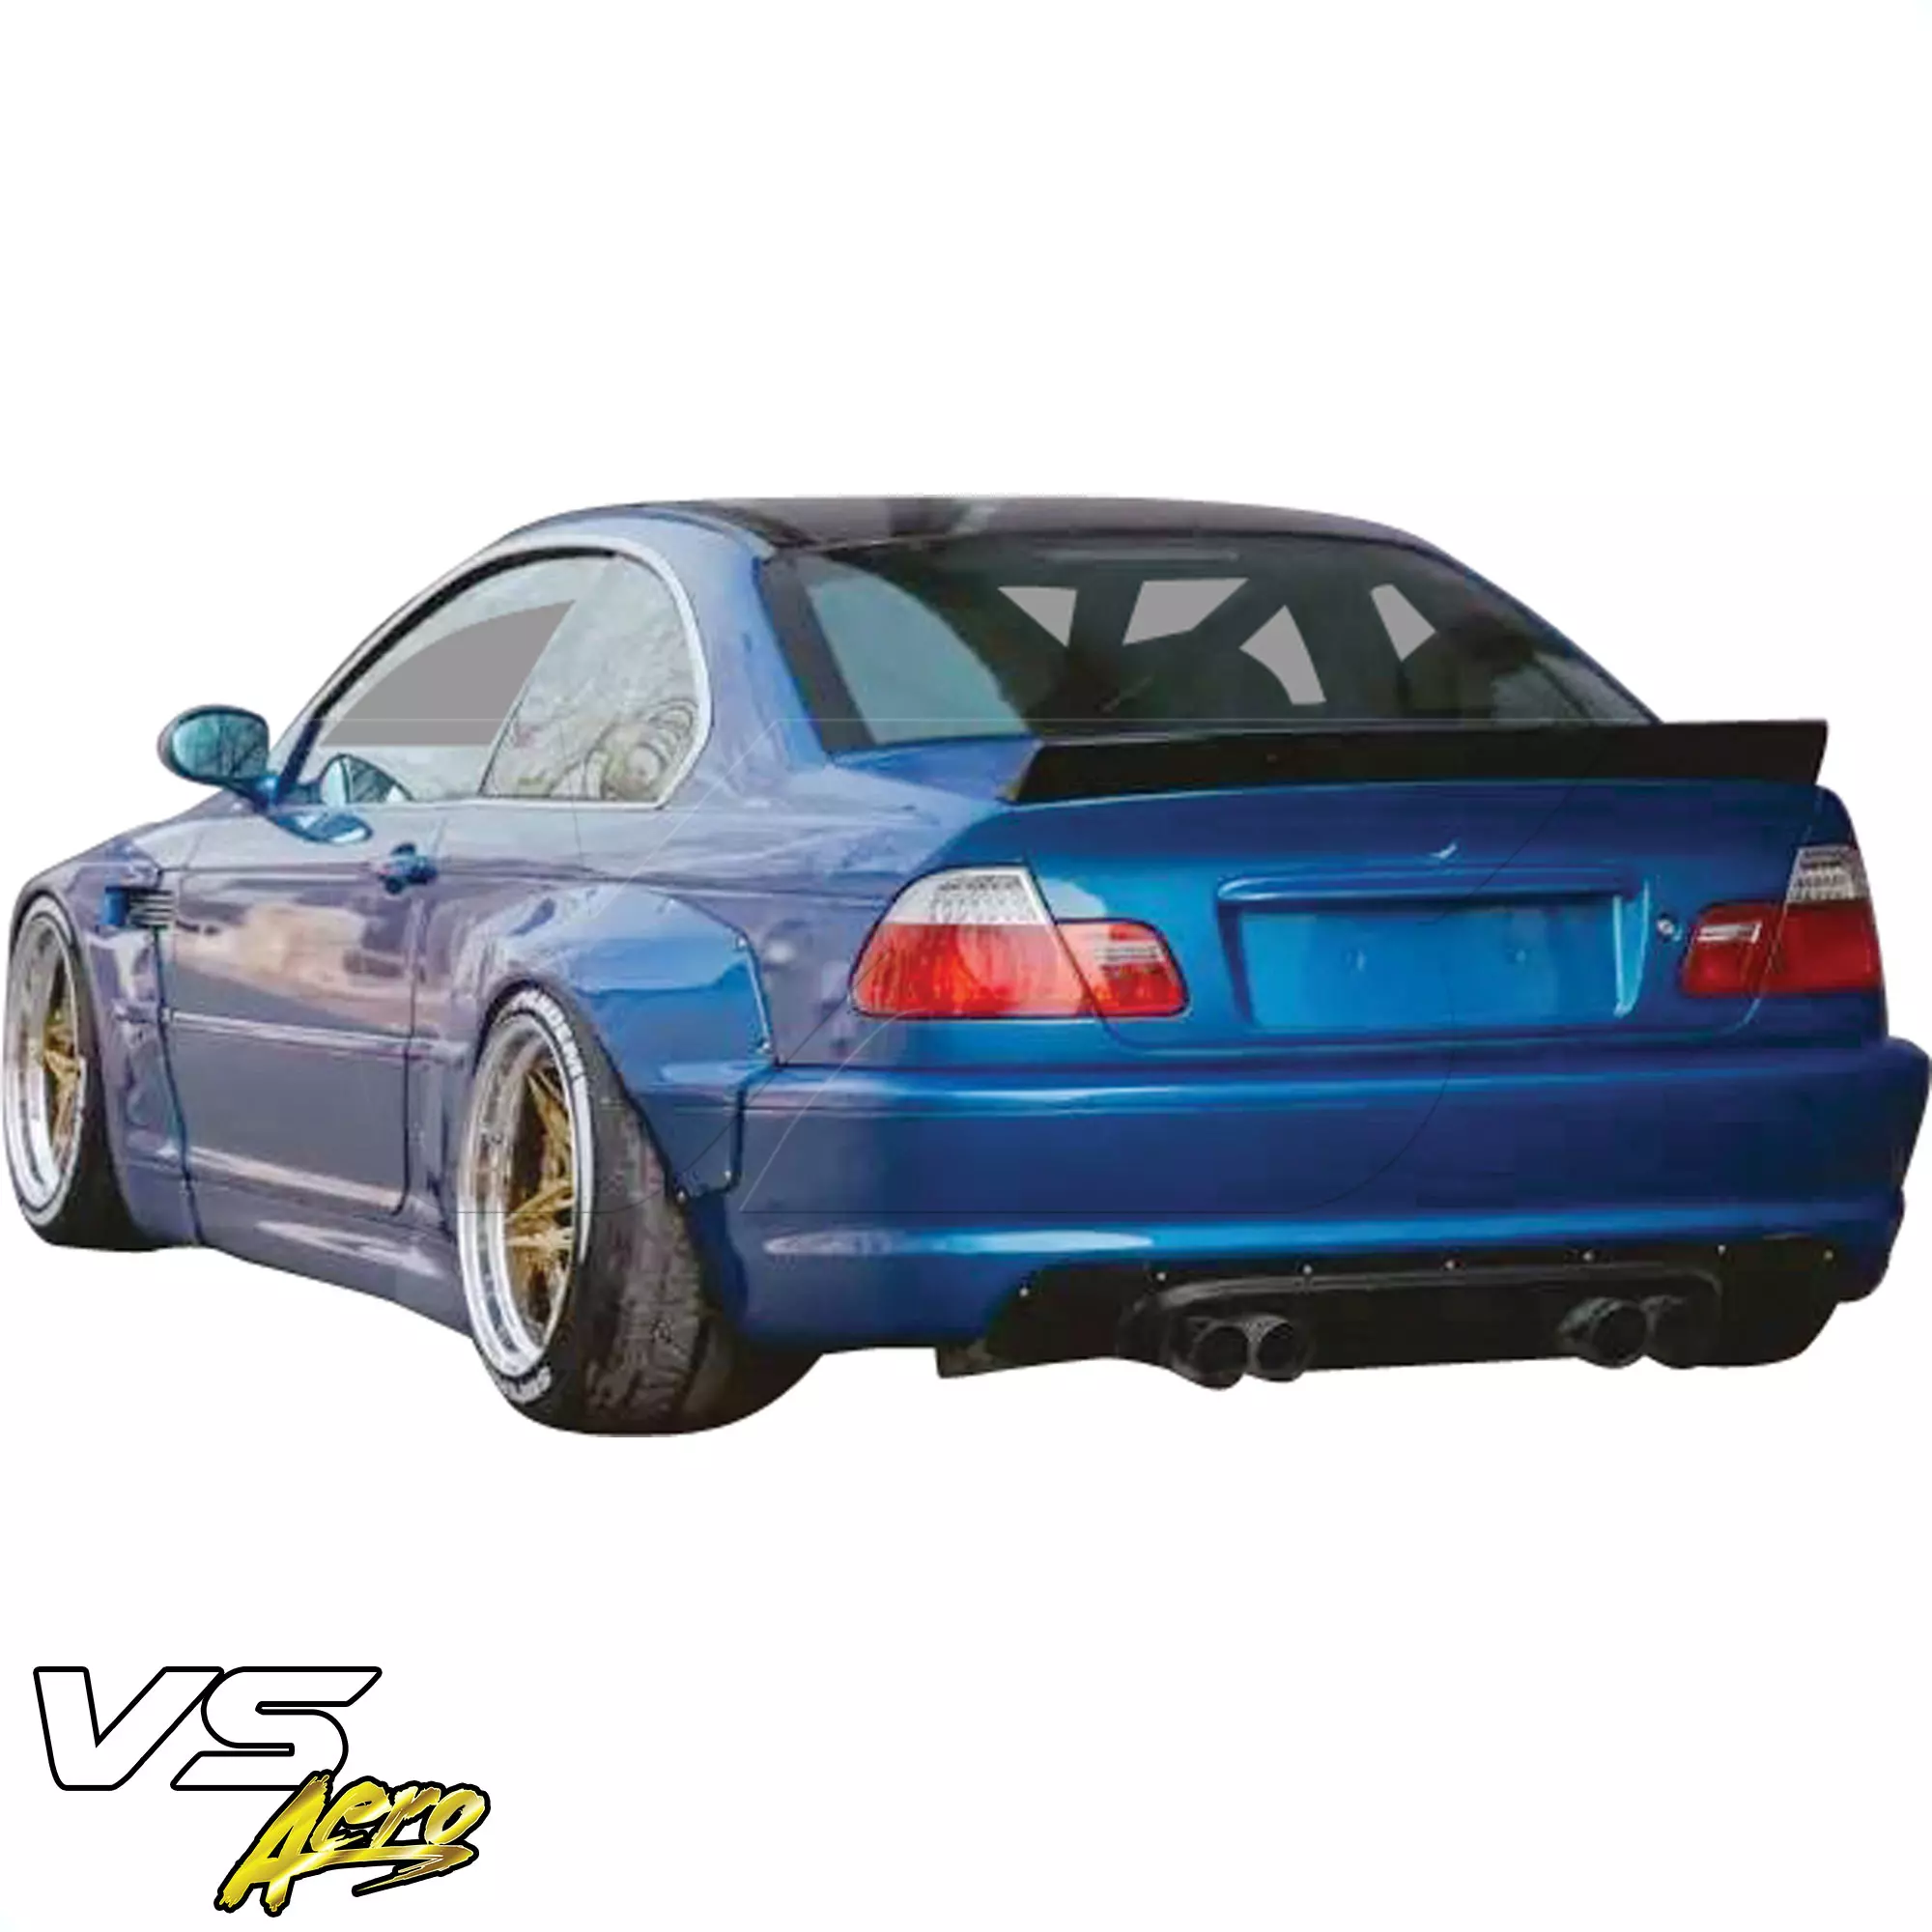 VSaero FRP TKYO Spoiler Wing > BMW 3-Series 325Ci 330Ci E46 1999-2005 > 2dr Coupe - Image 6